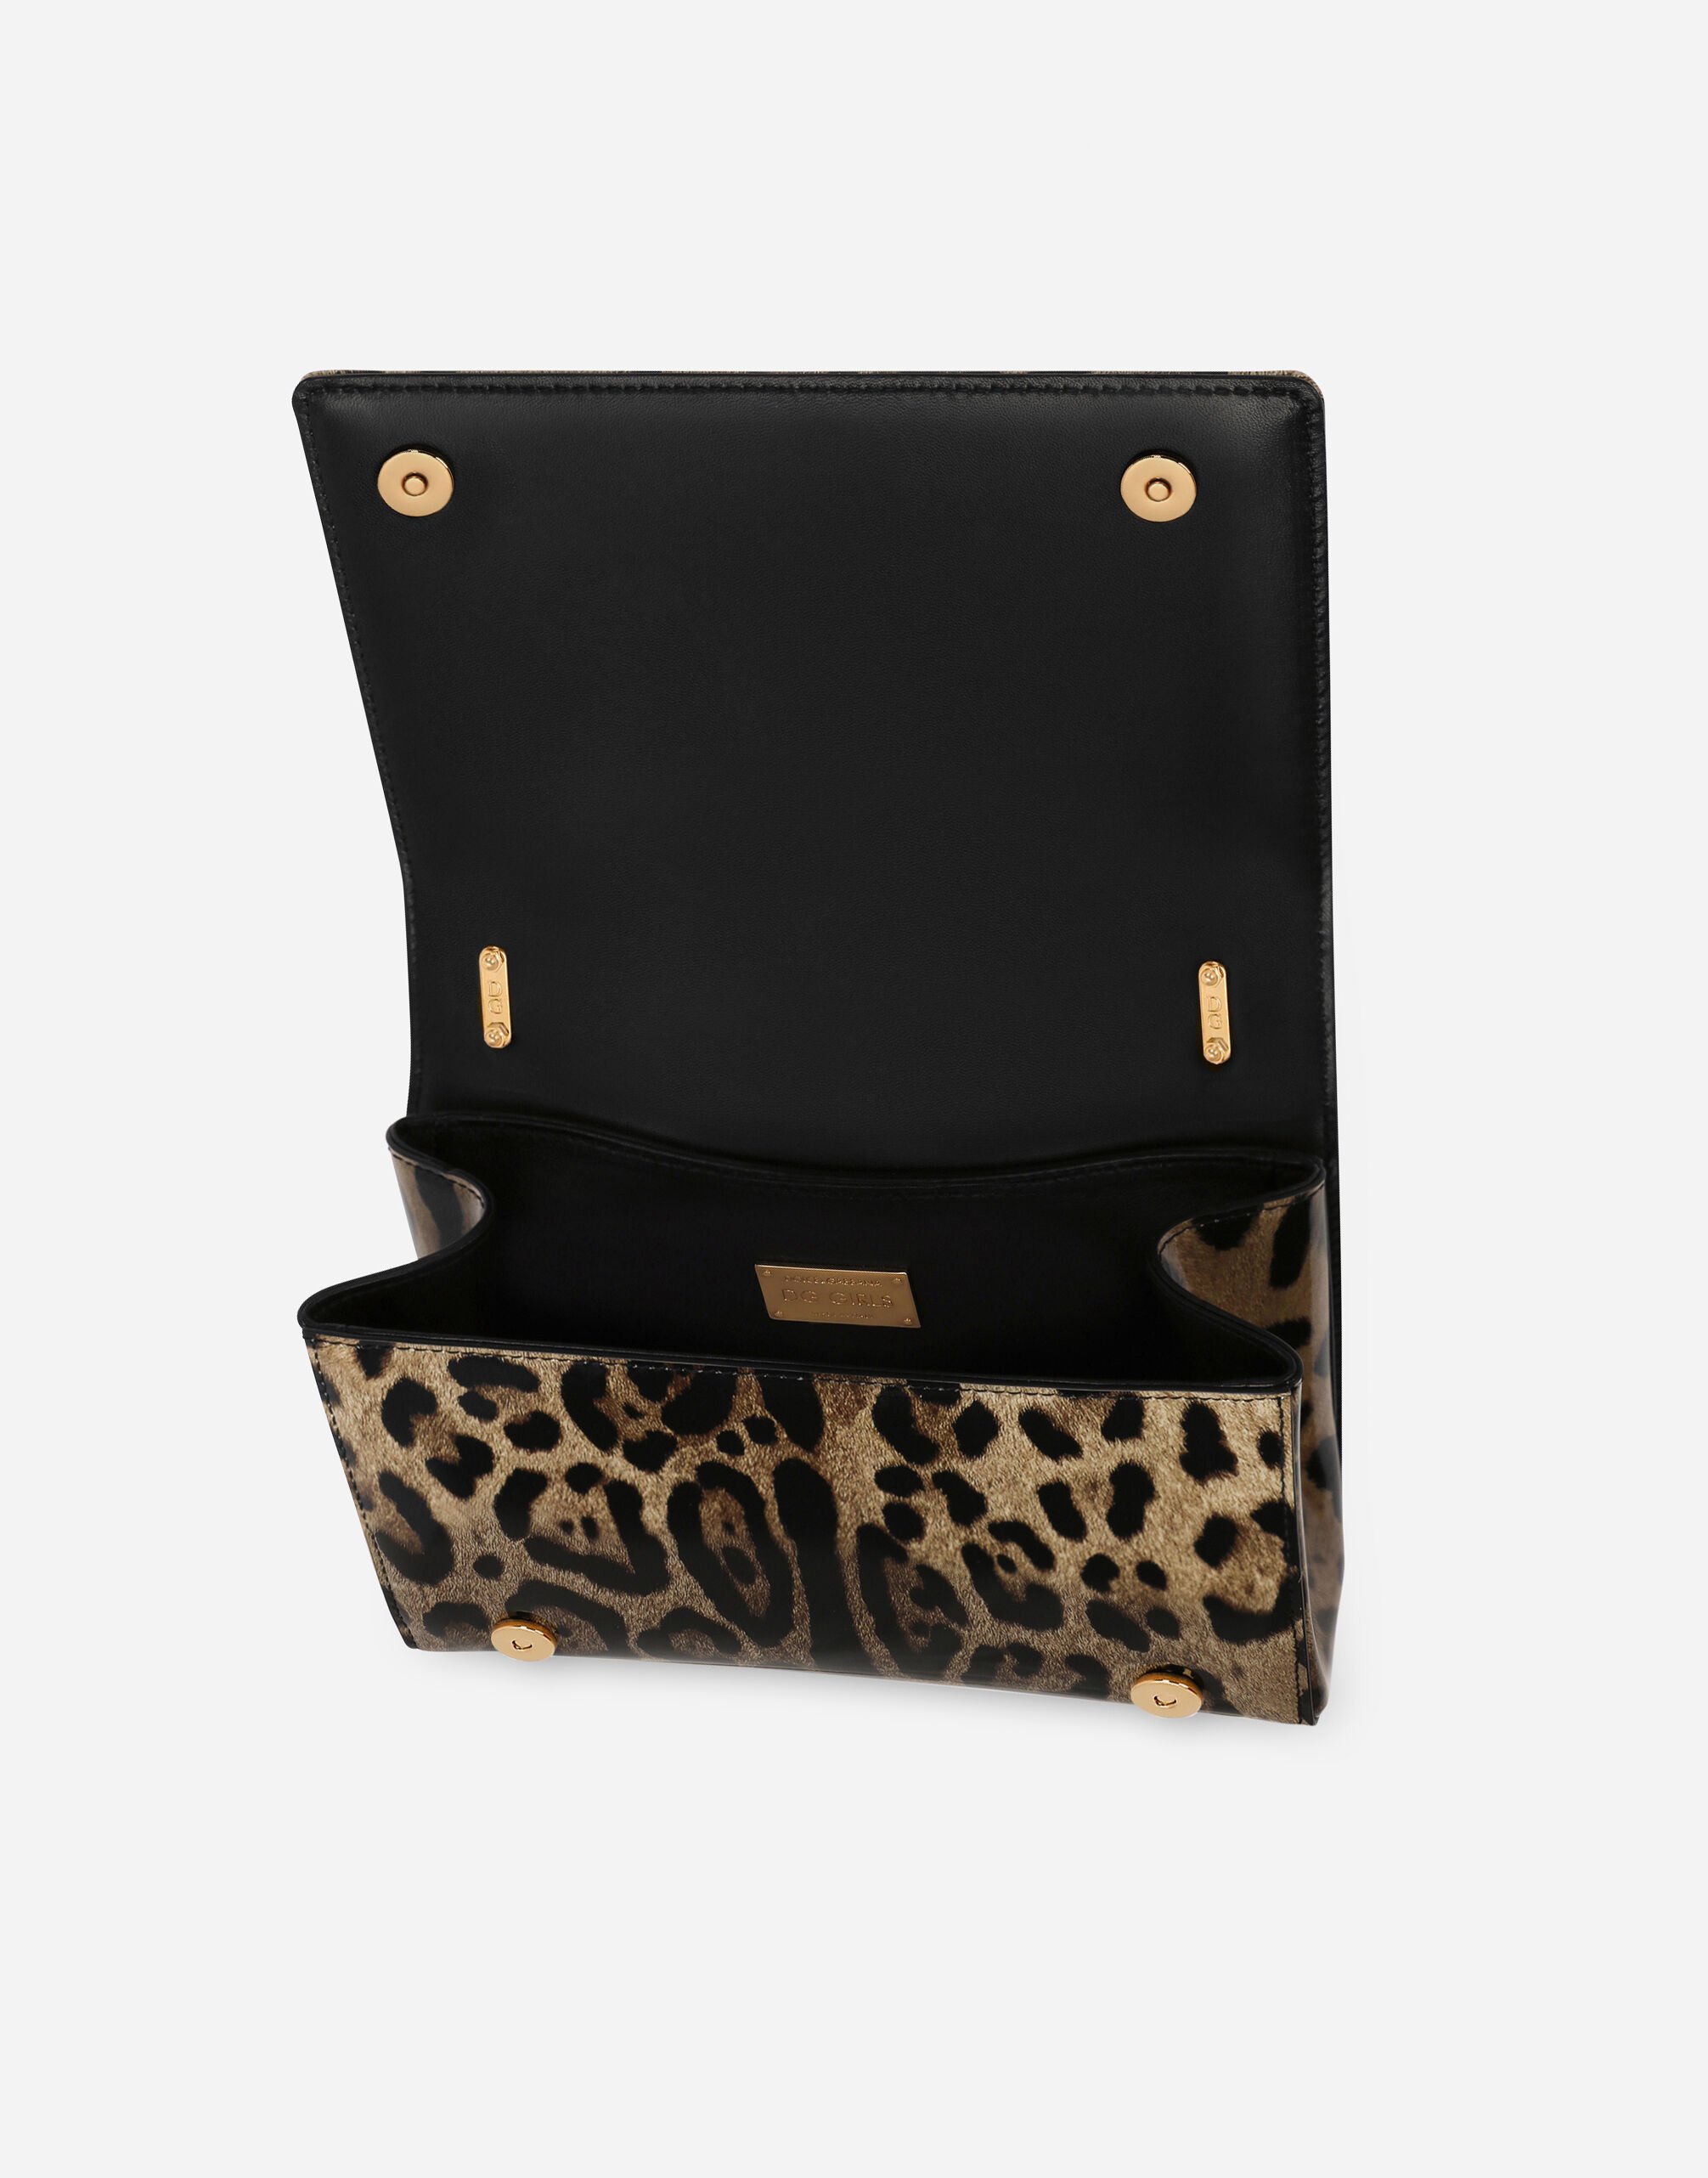 Medium DG Girls shoulder bag in Animal Print for | Dolce&Gabbana 